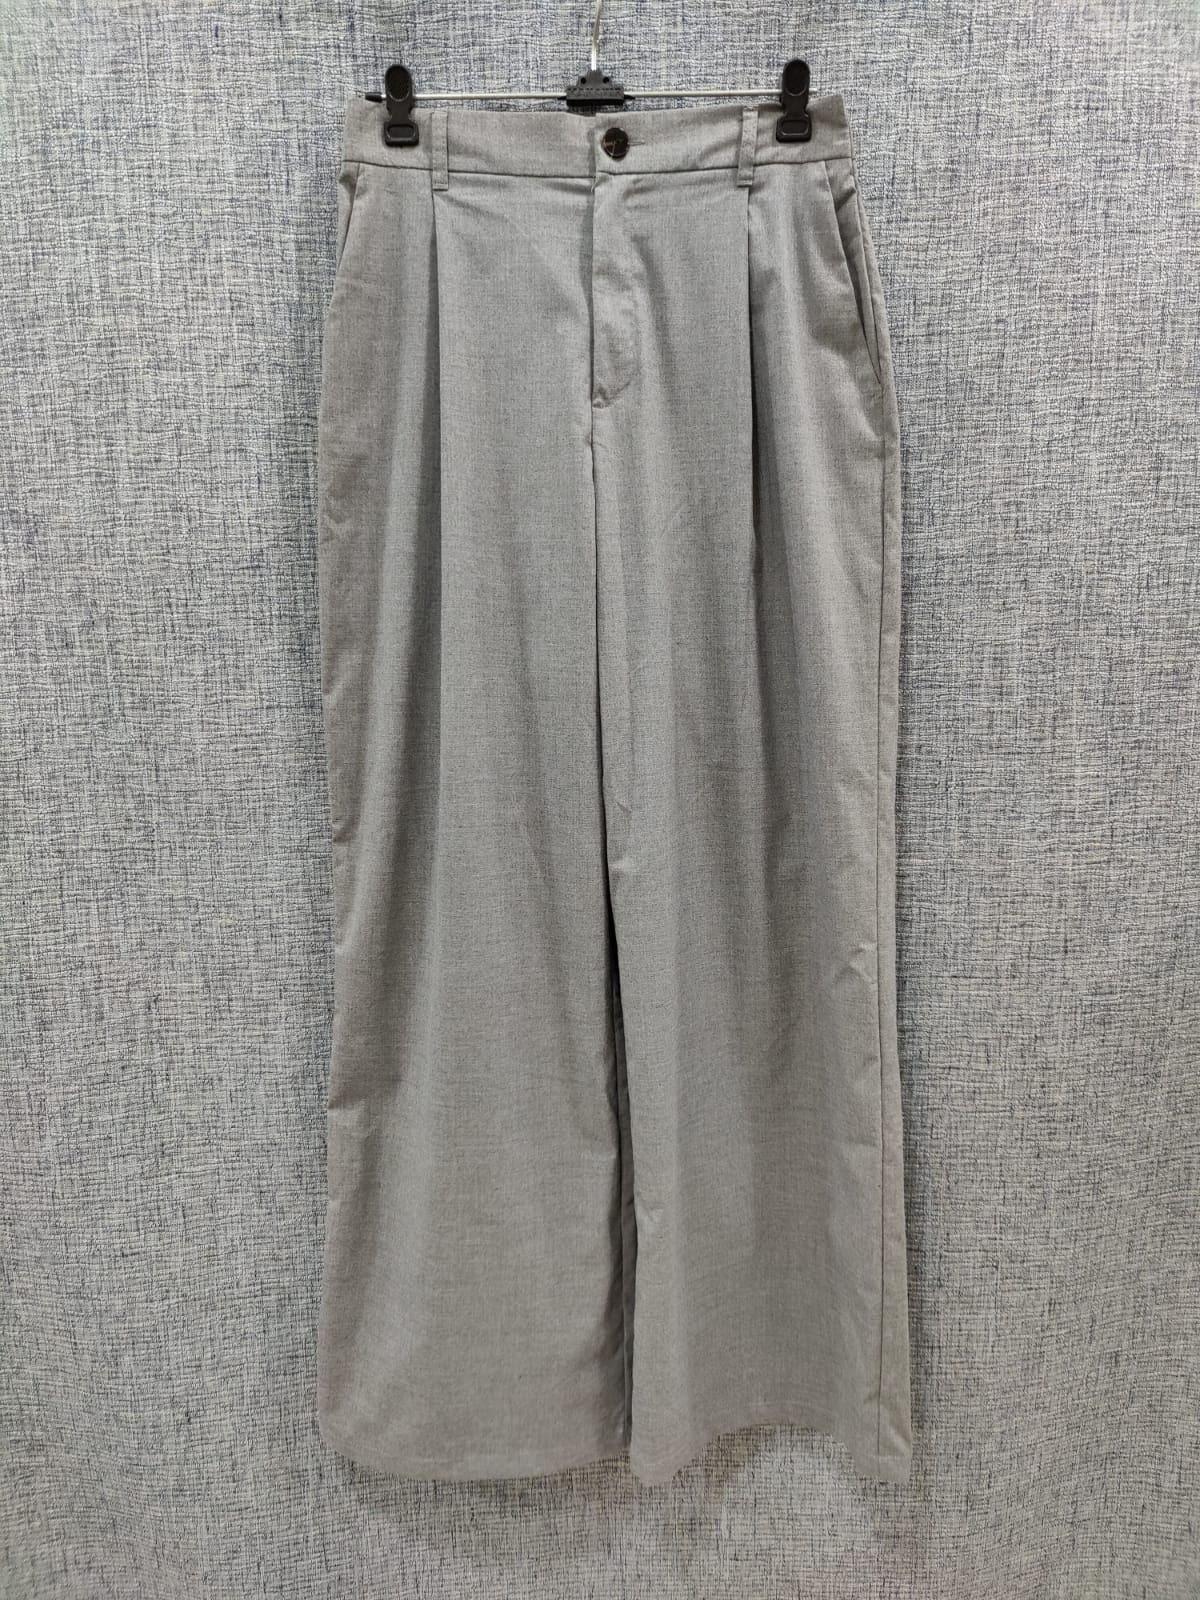 ZARA Grey Pleated Pants | Relove